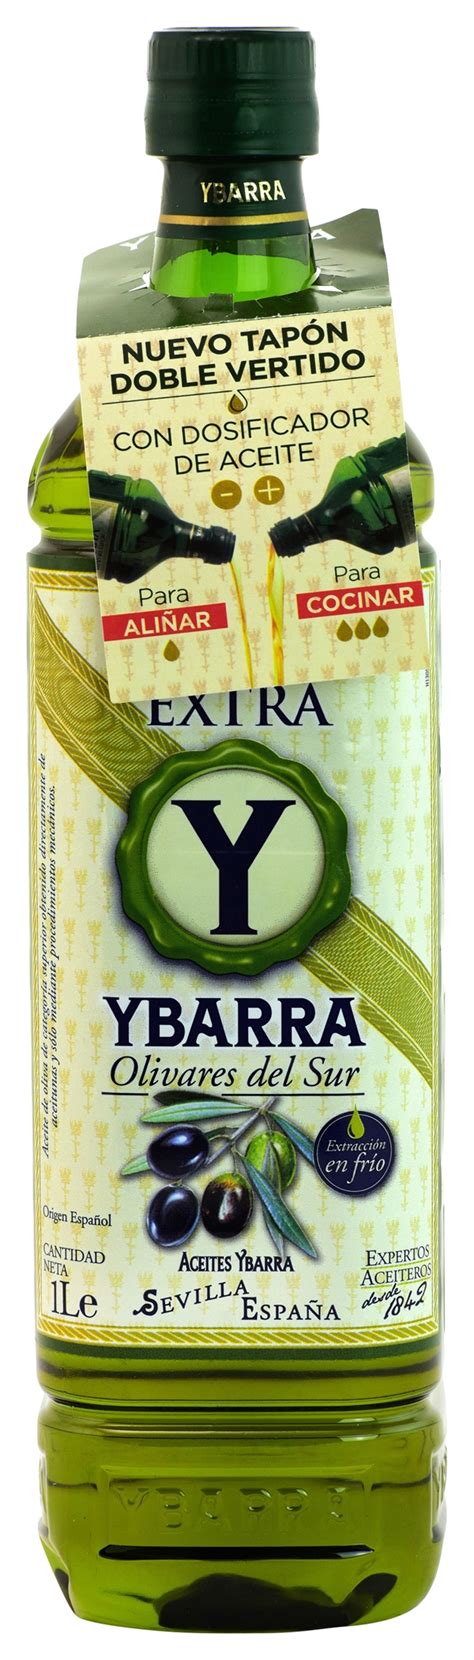 Ybarra Aceite De Oliva Virgen Extra Opiniones Ocu